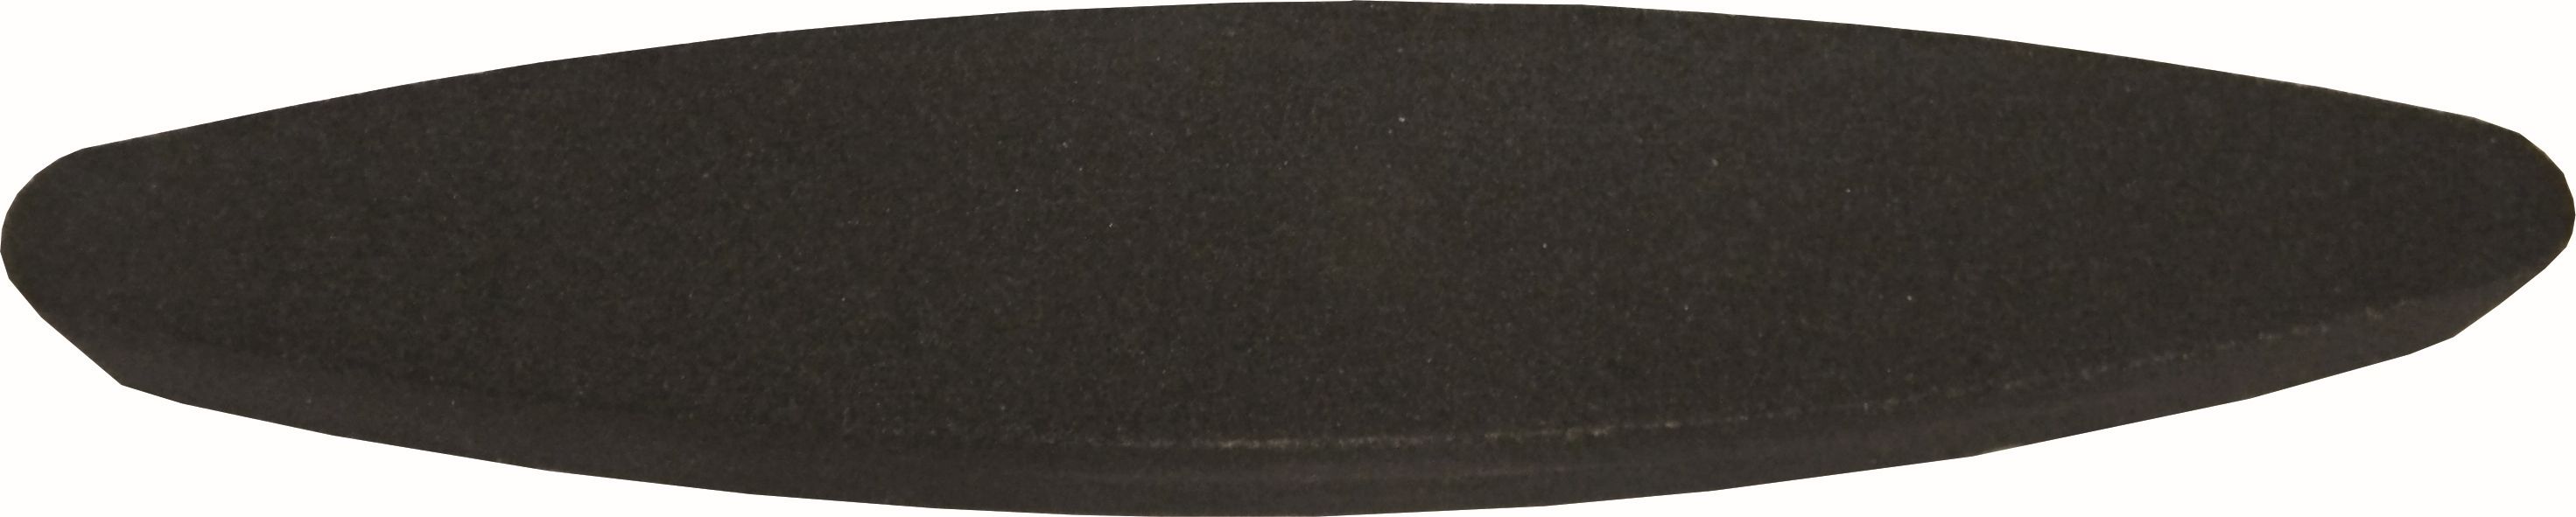 Brousek 22x4 cm černý karbon